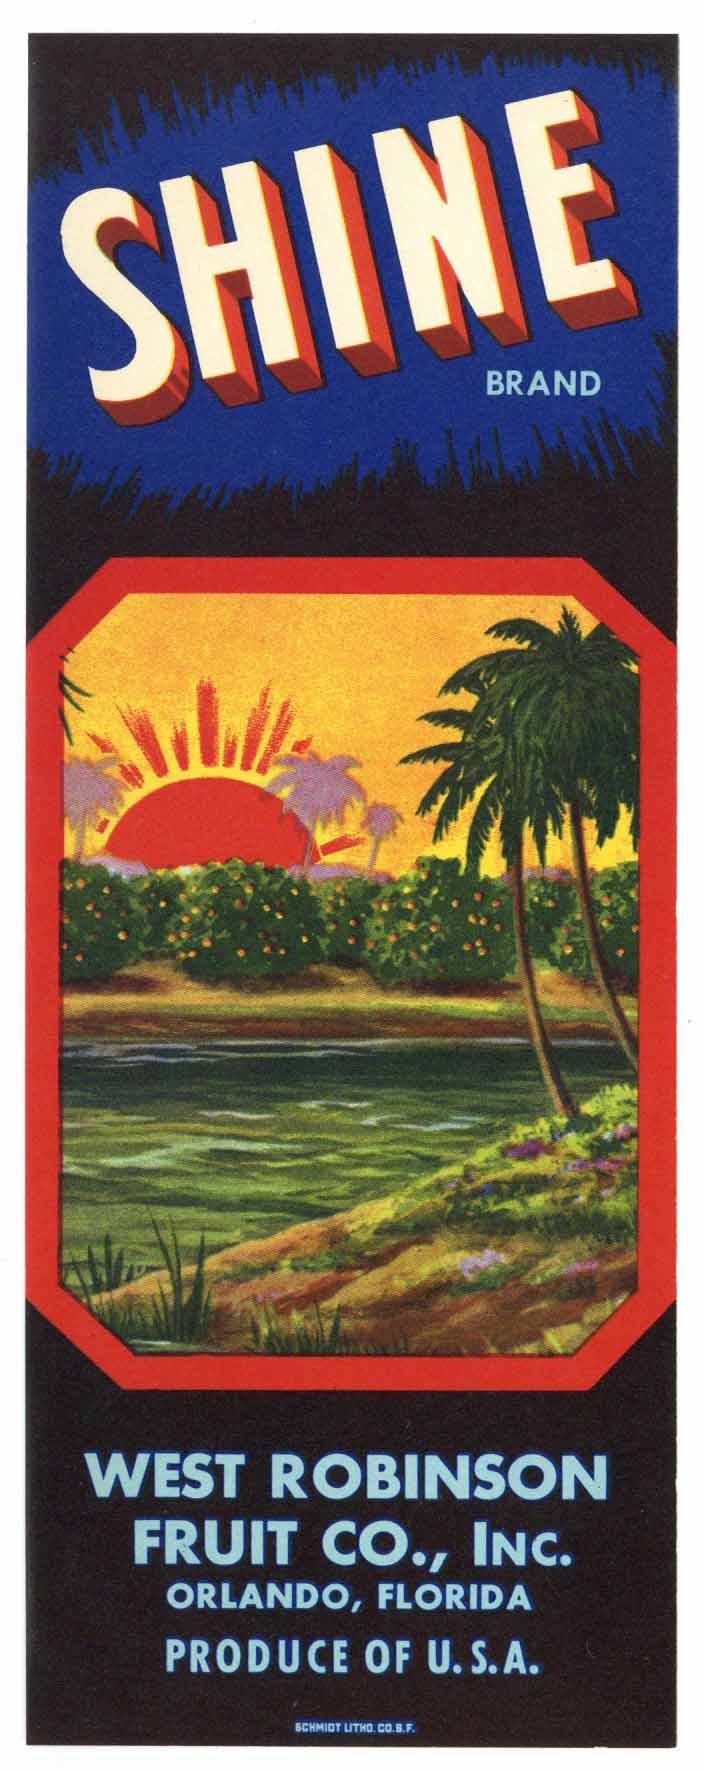 Shine Brand Vintage Orlando Florida Citrus Crate Label, v